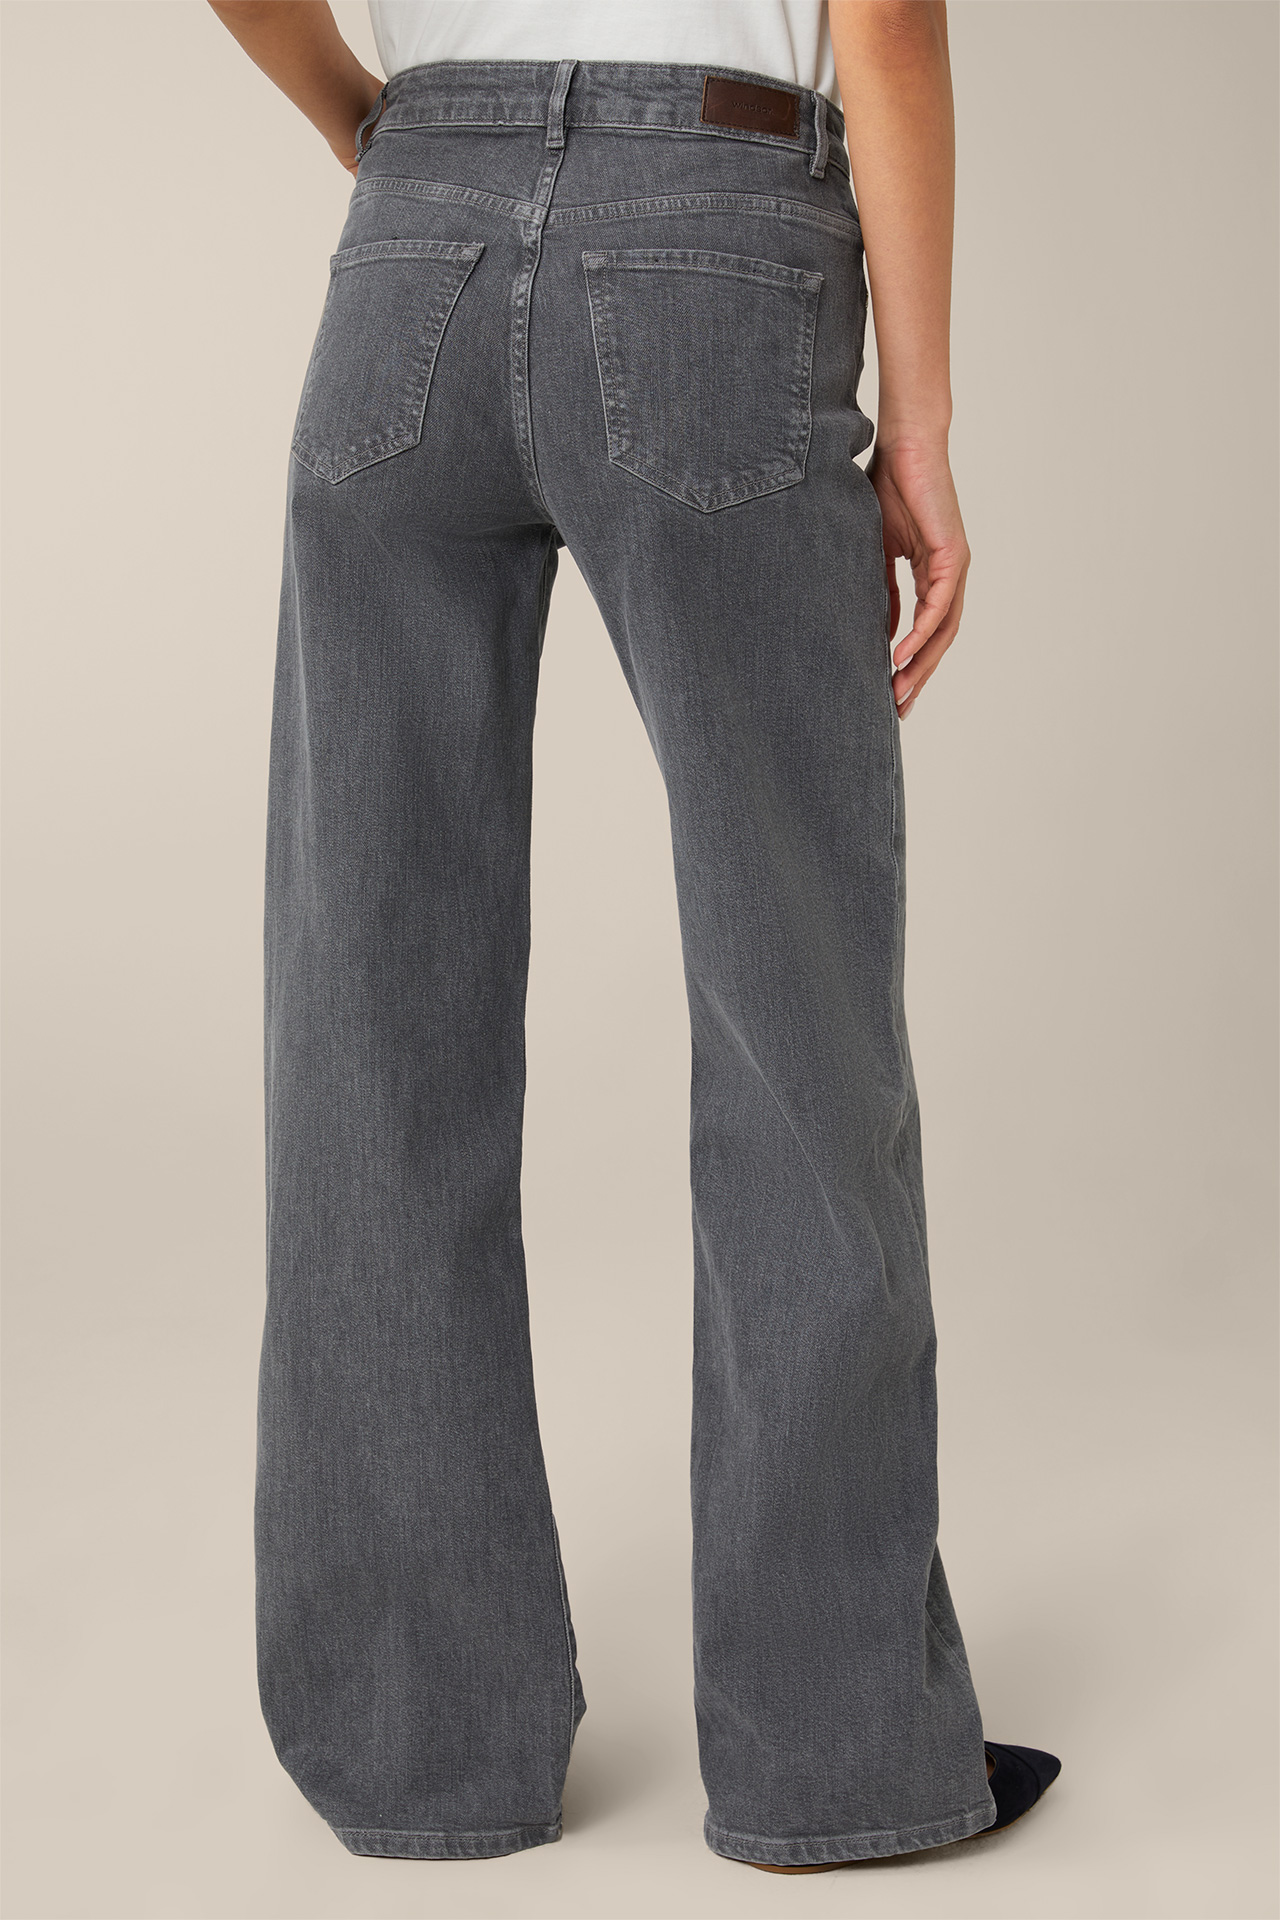 Pantalon en jean Marlene, en gris délavé